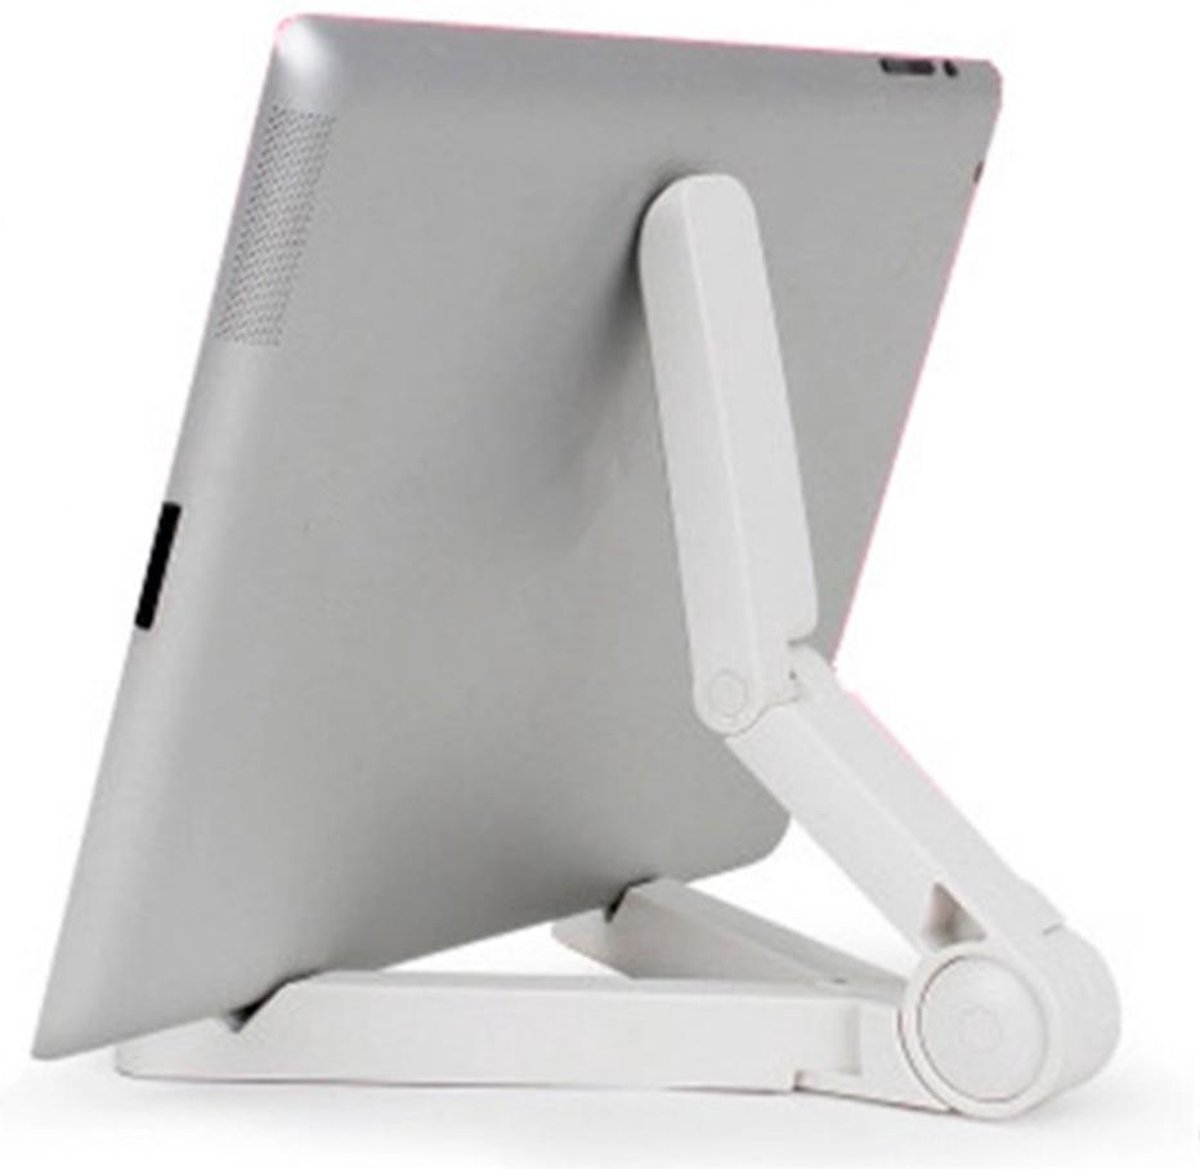 Universele Tablet / Smartphone Standaard - 4-14 Inch - iPad / Galaxy Tab Tafel Stand Houder - Wit